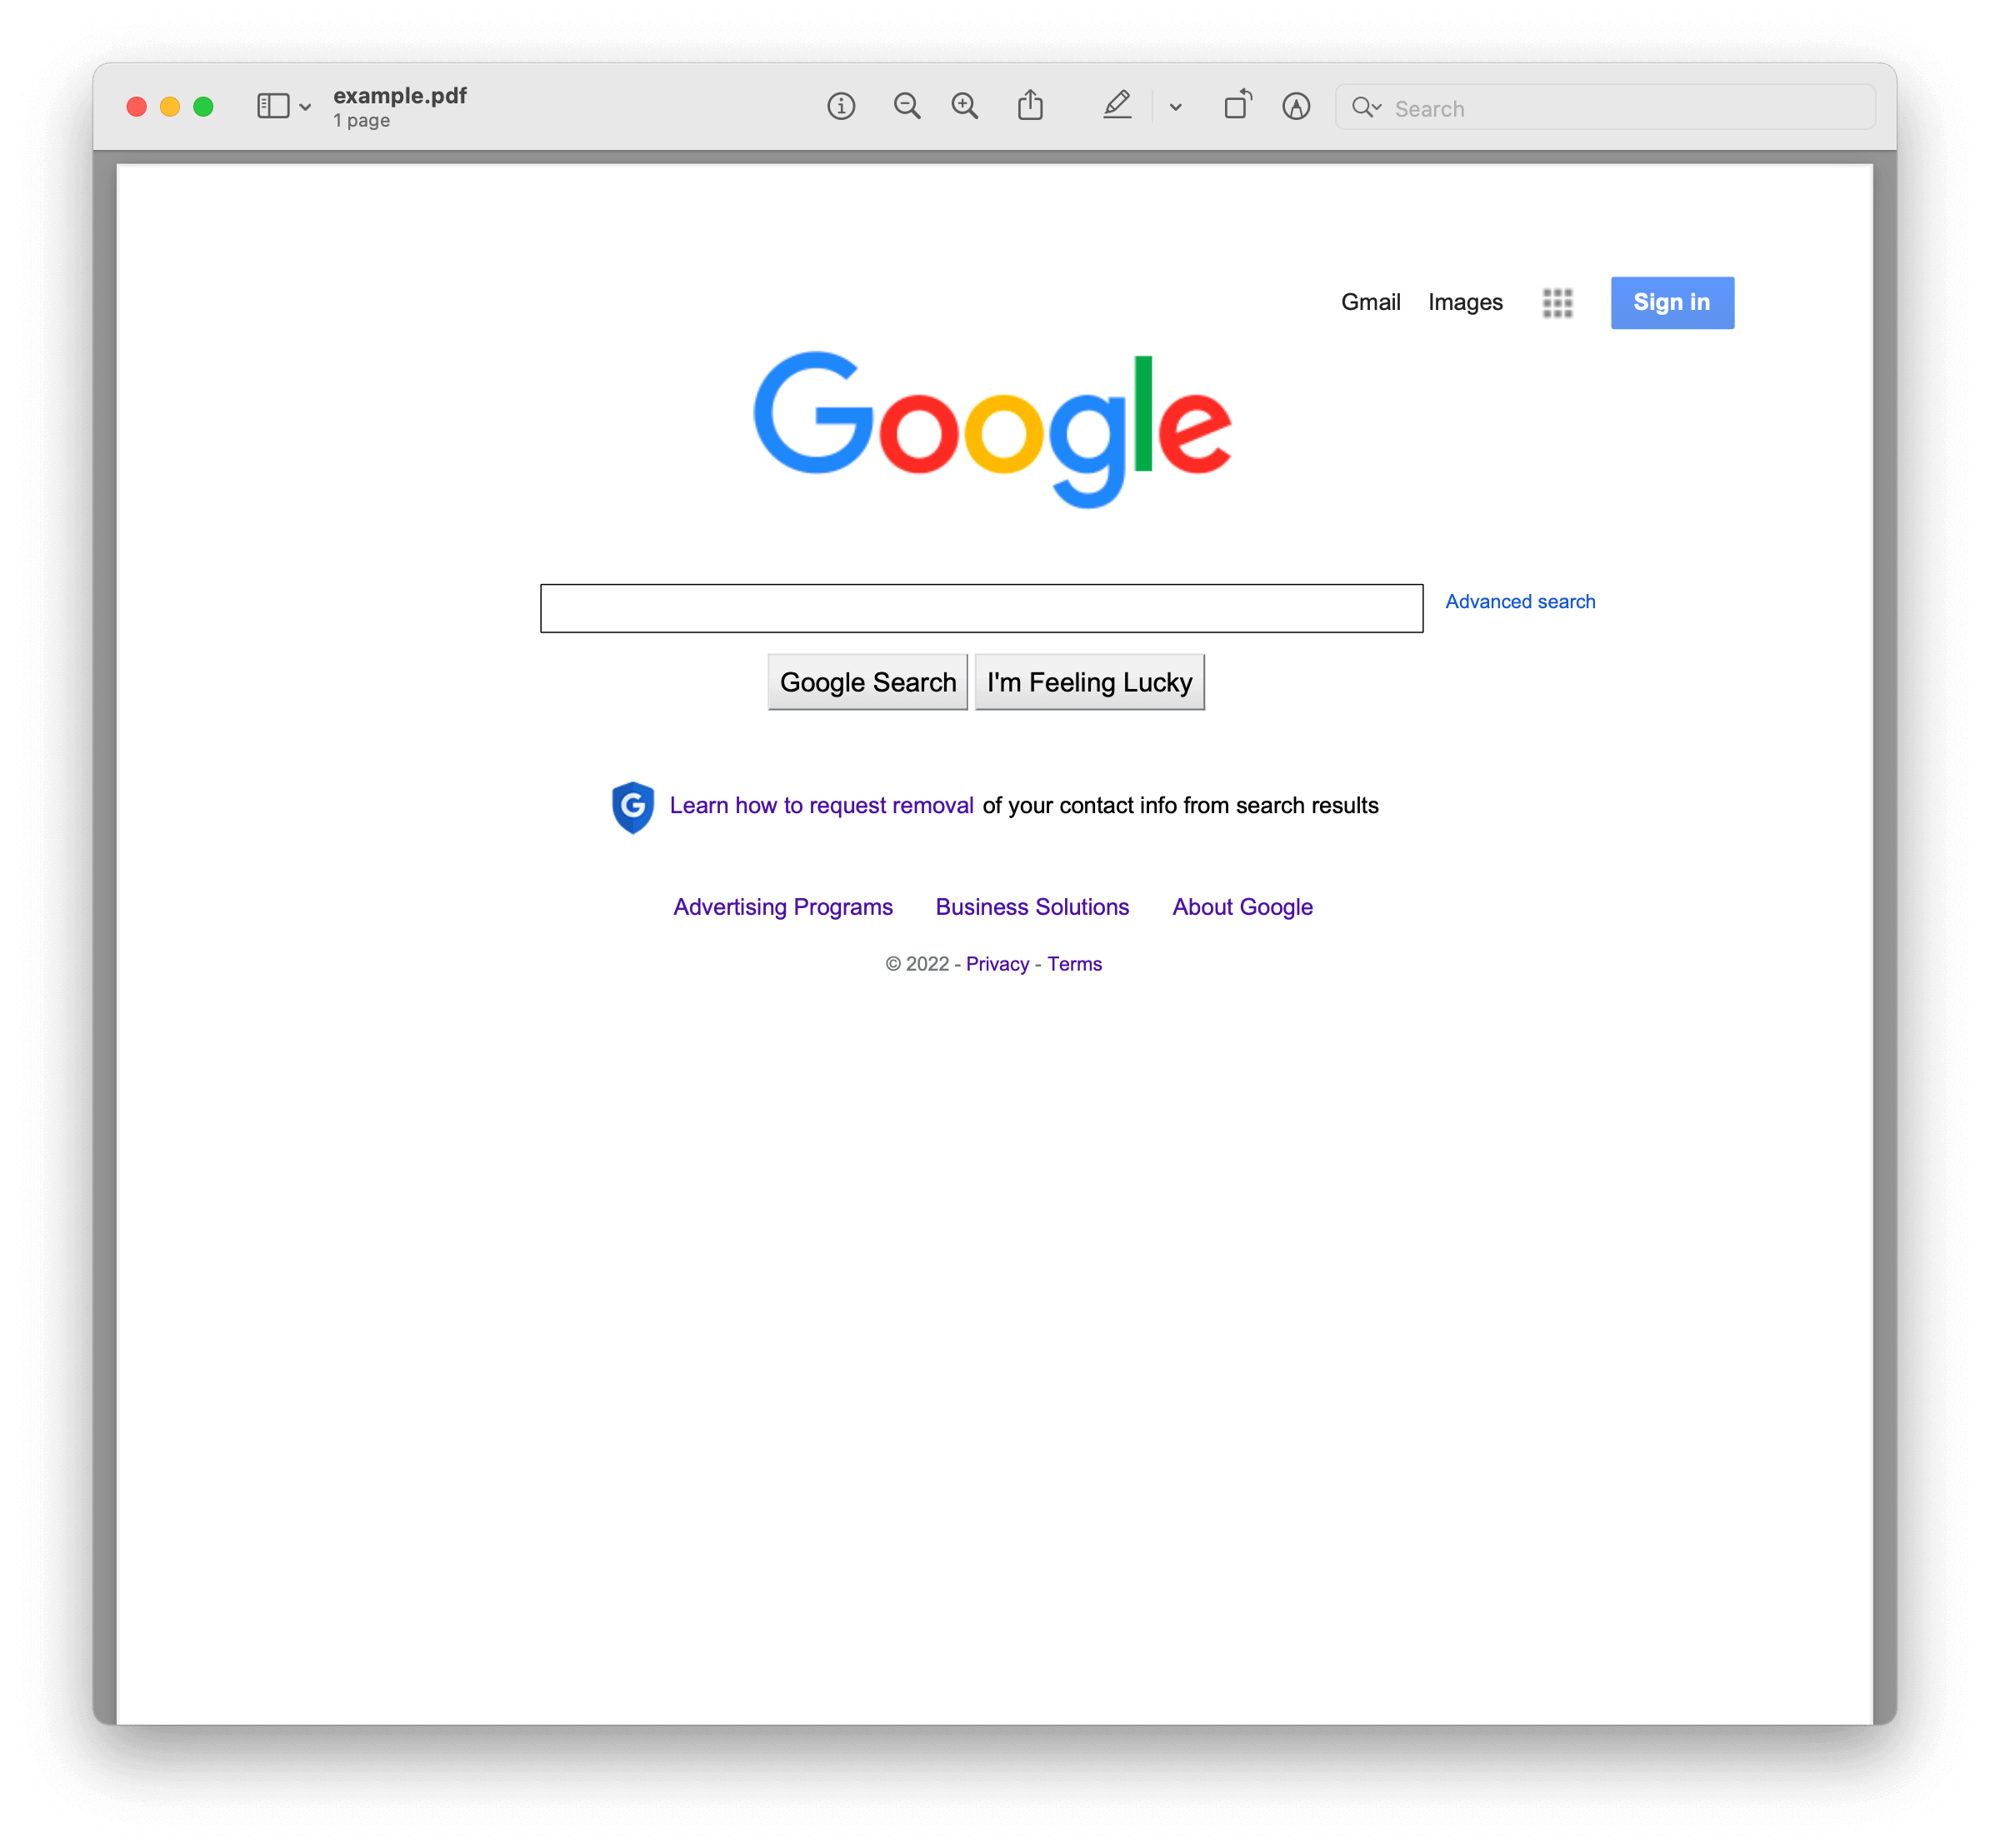 Google Home Page PDF